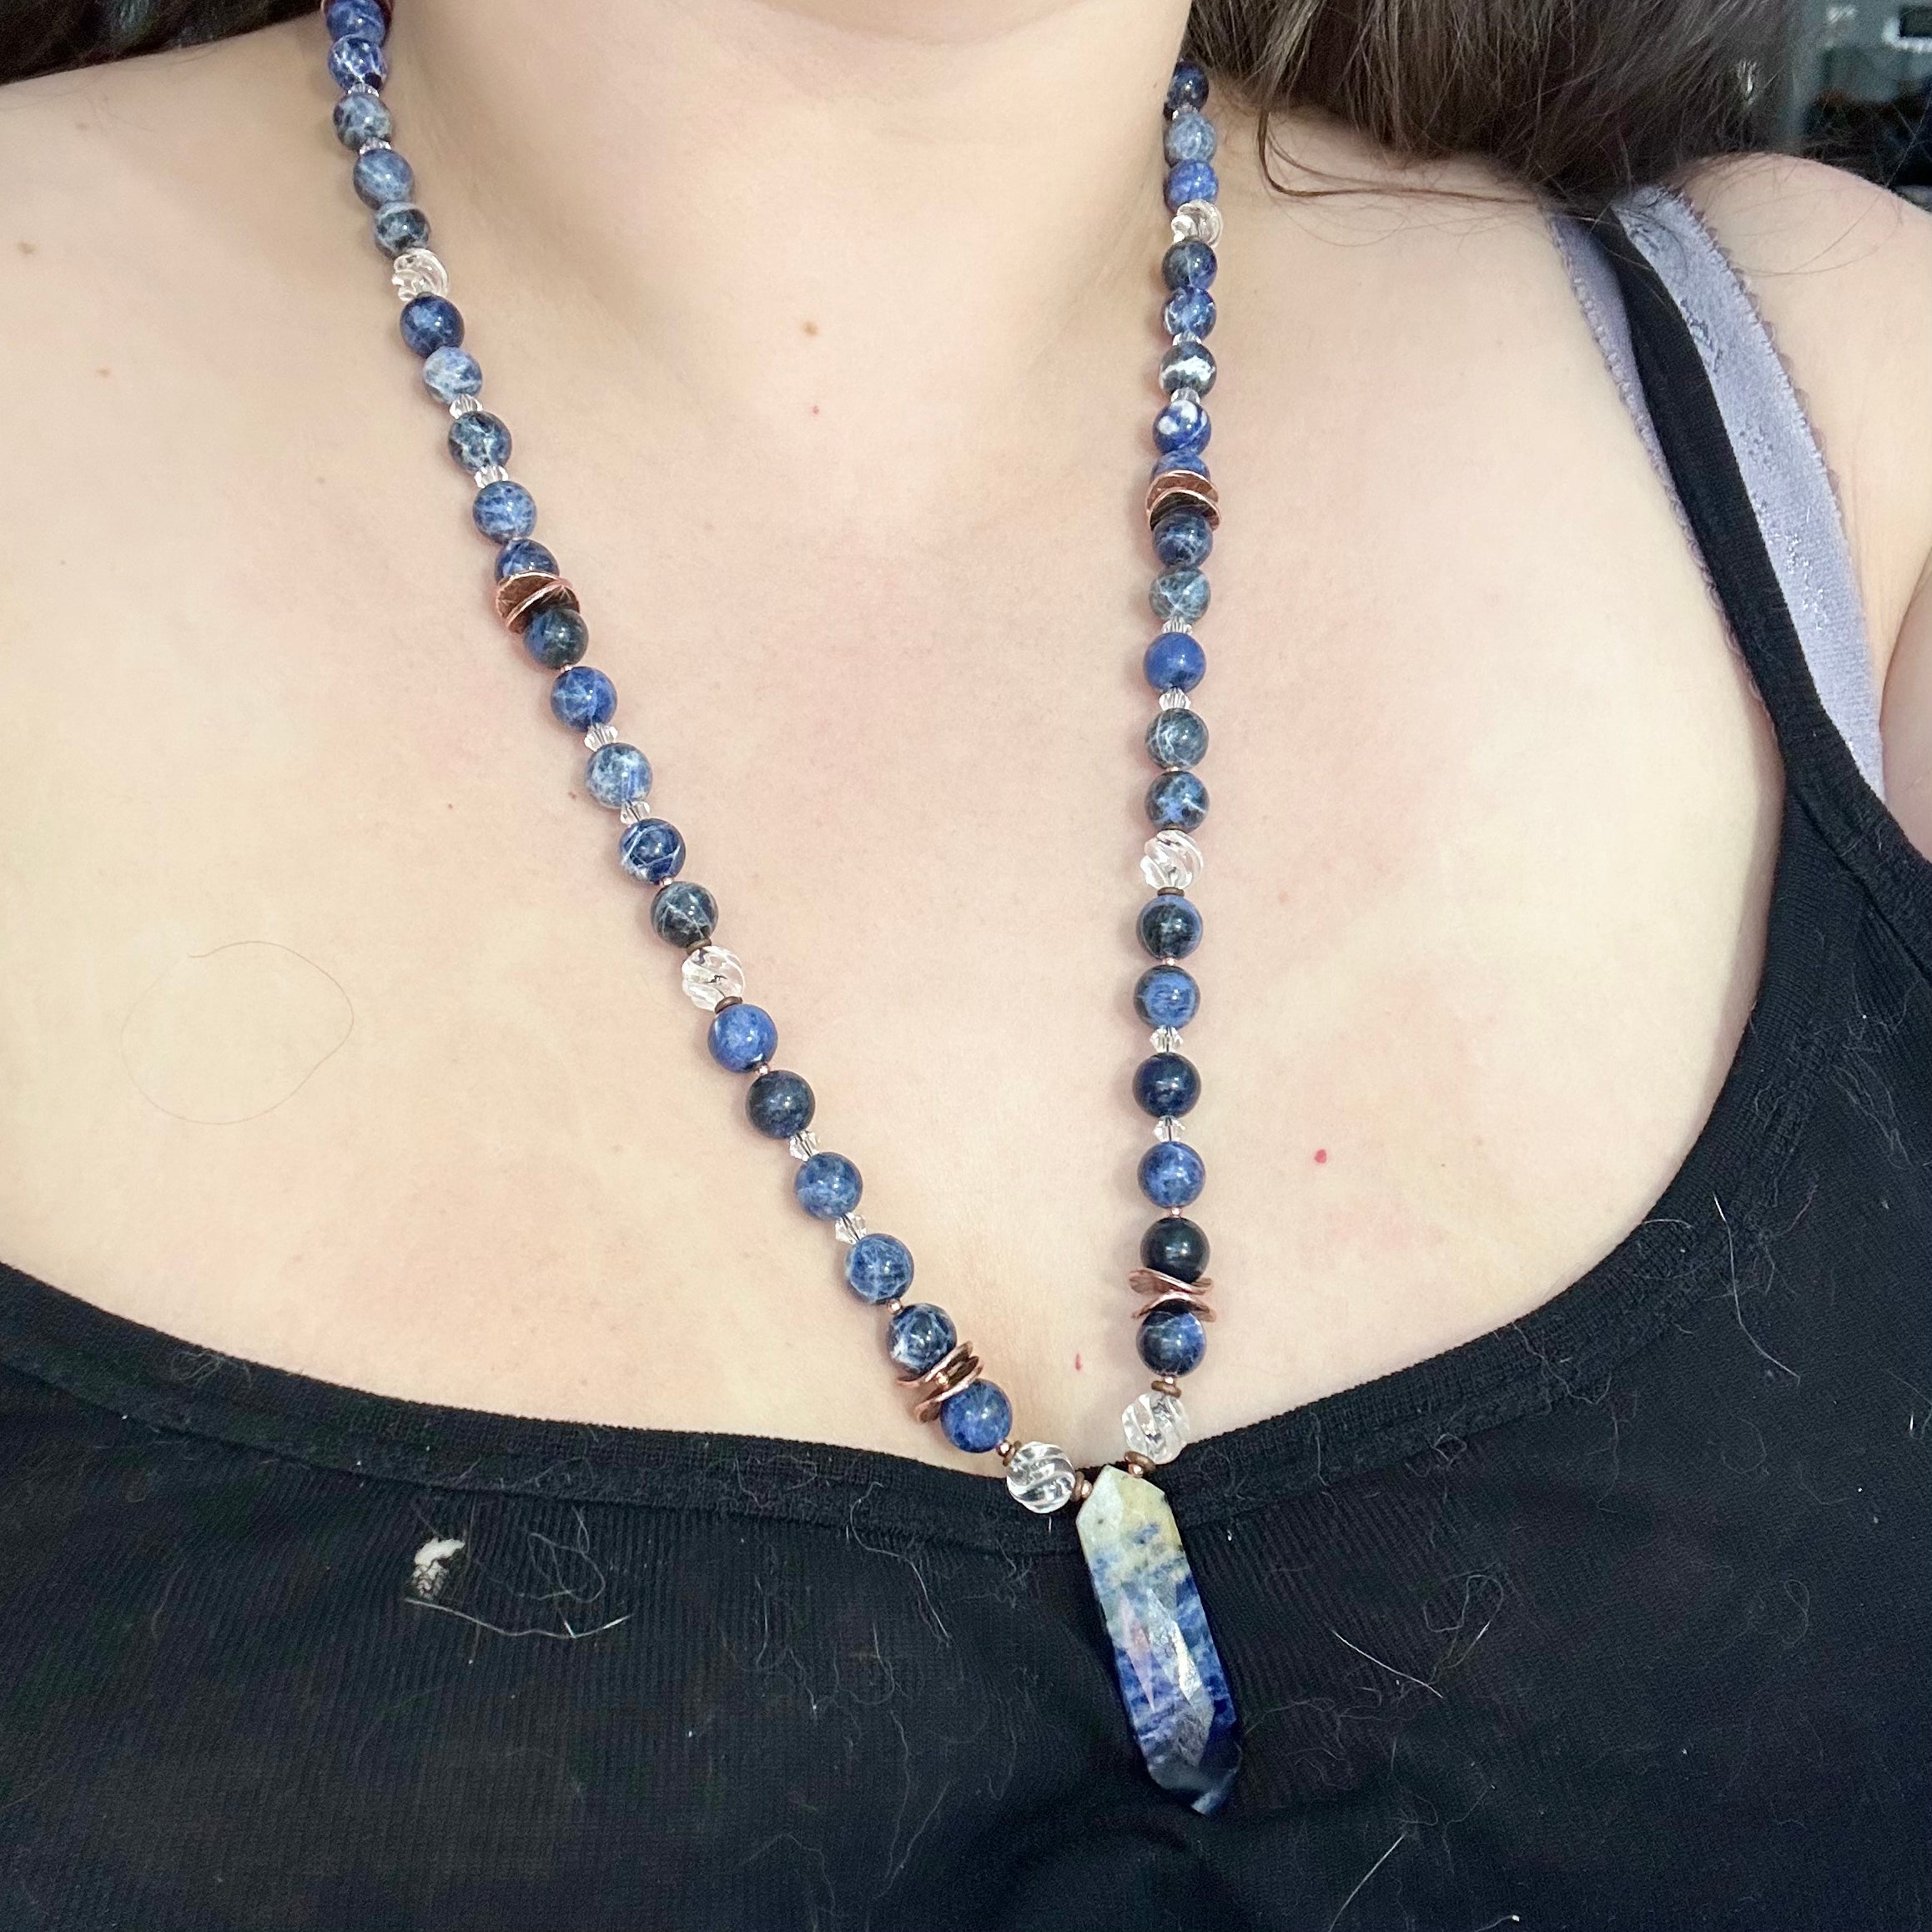 Sodalite, Quartz, Crystal, and Copper necklace